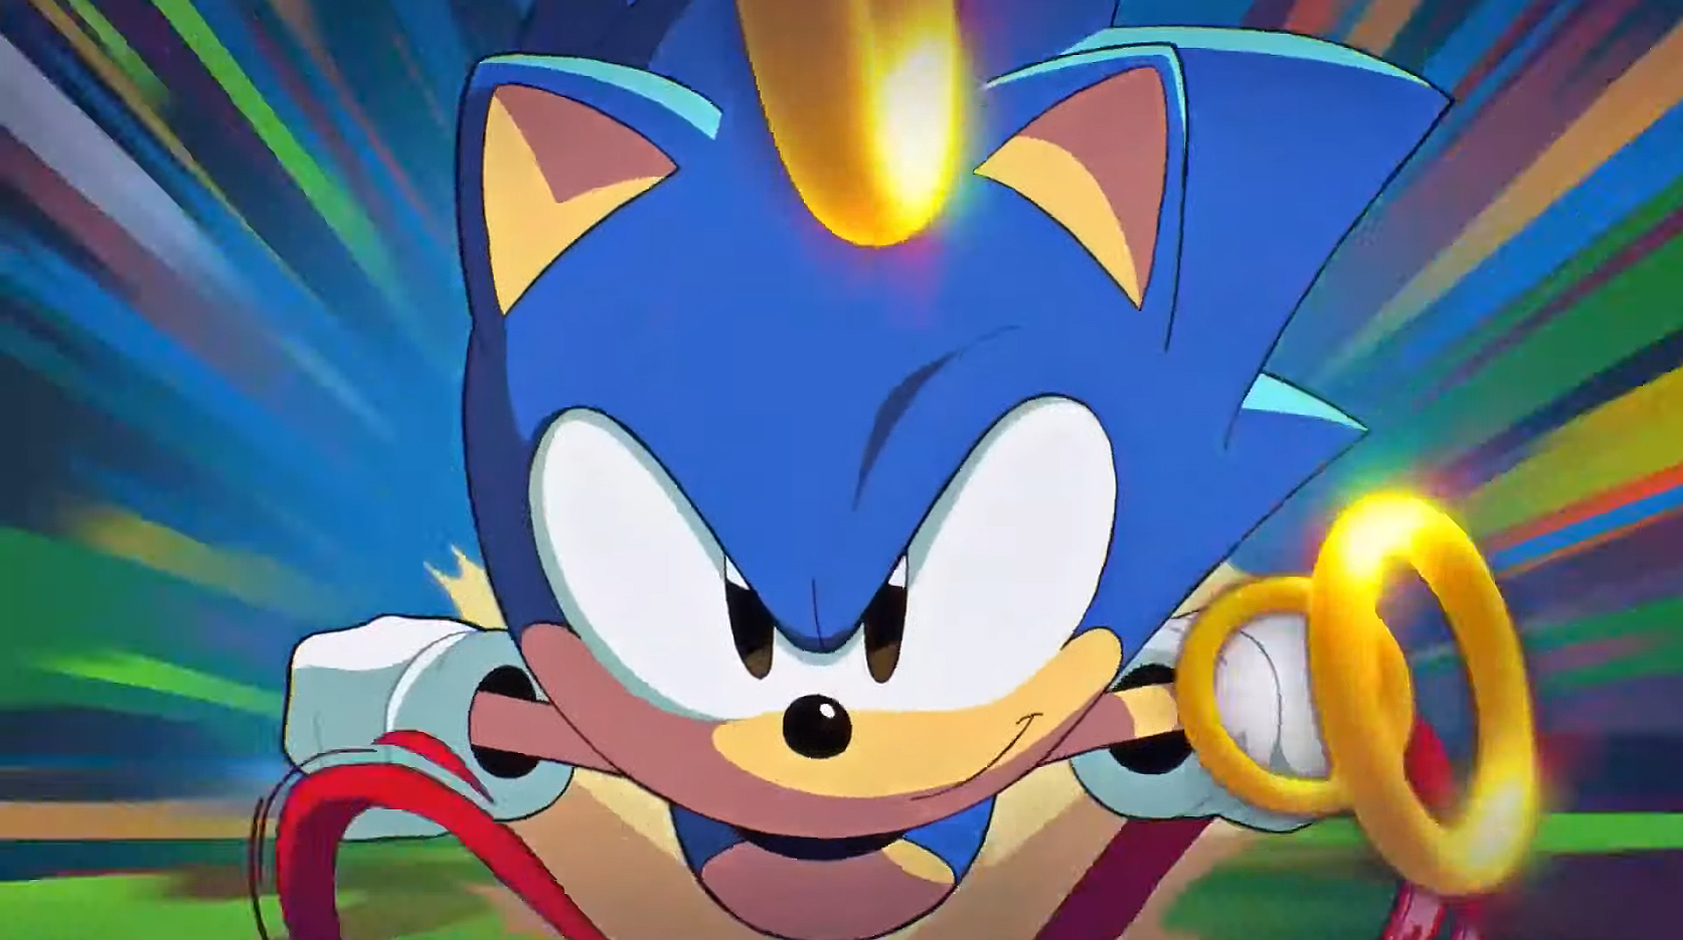 Sonic Prime Dash - IGN